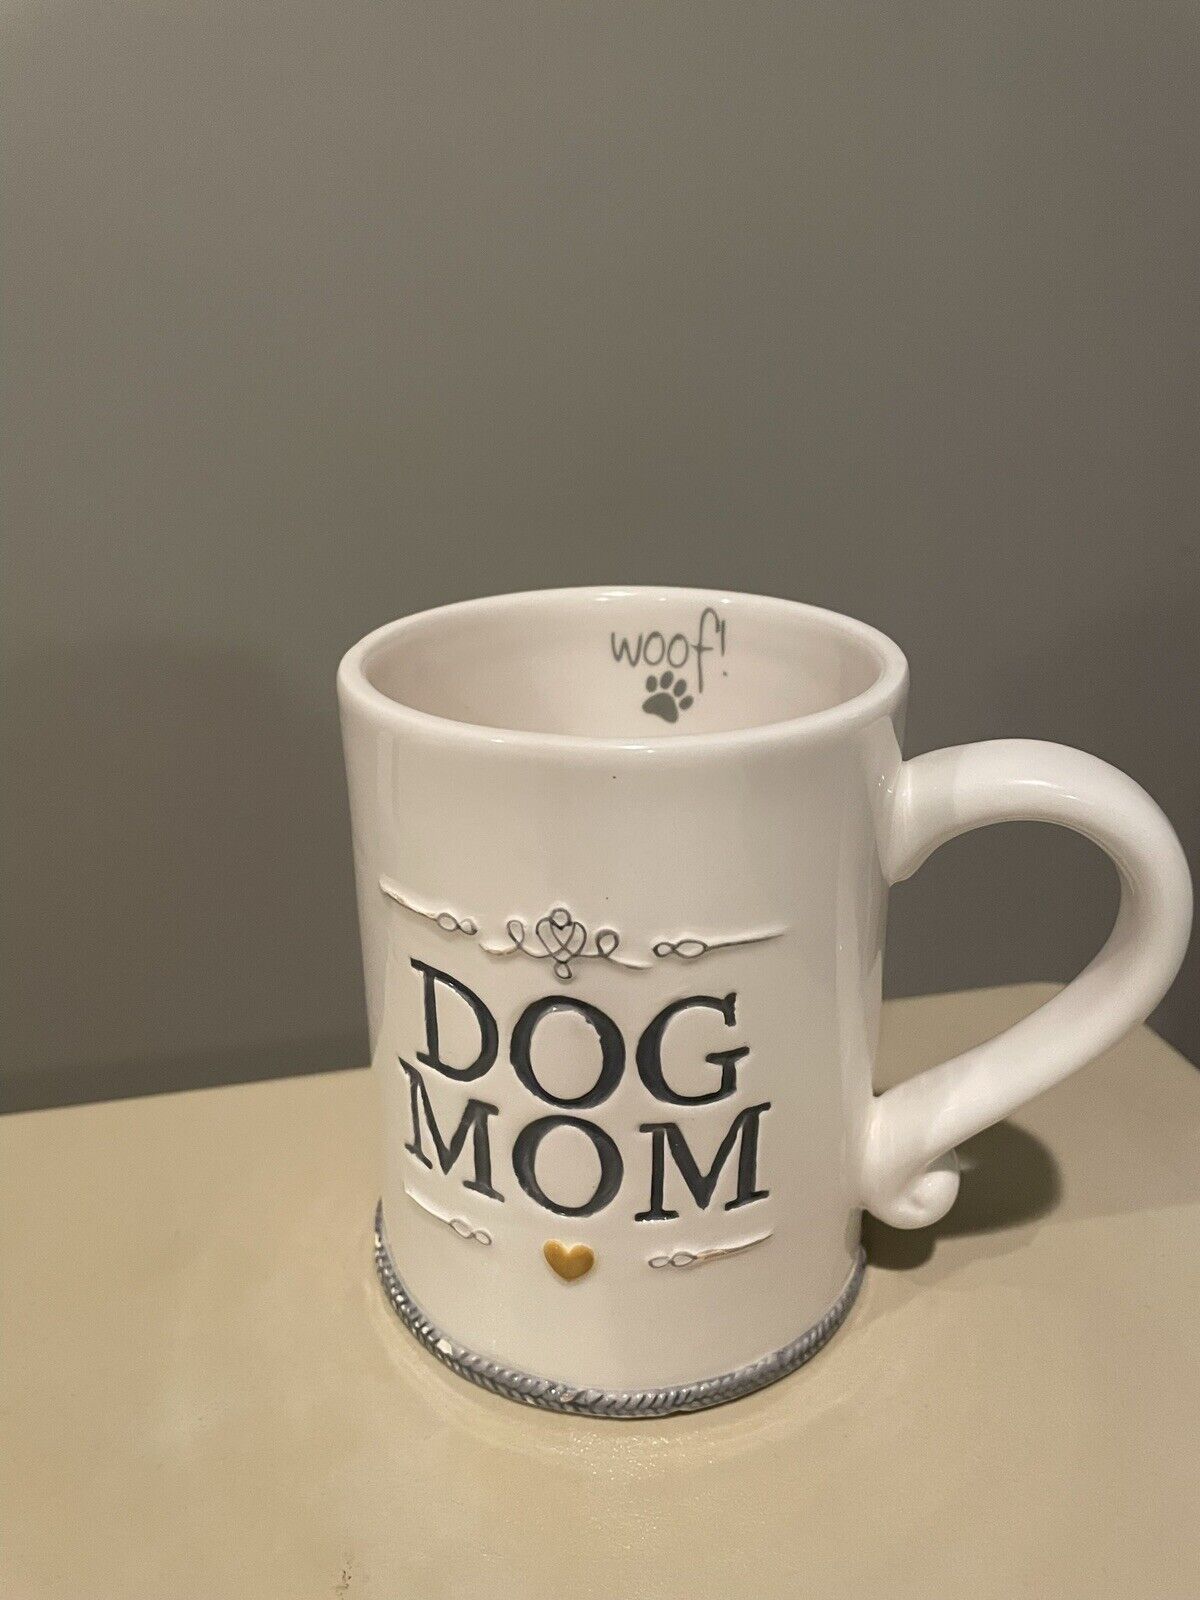 DOG MOM COFFEE / TEA MUG GRASSLANDS ROAD